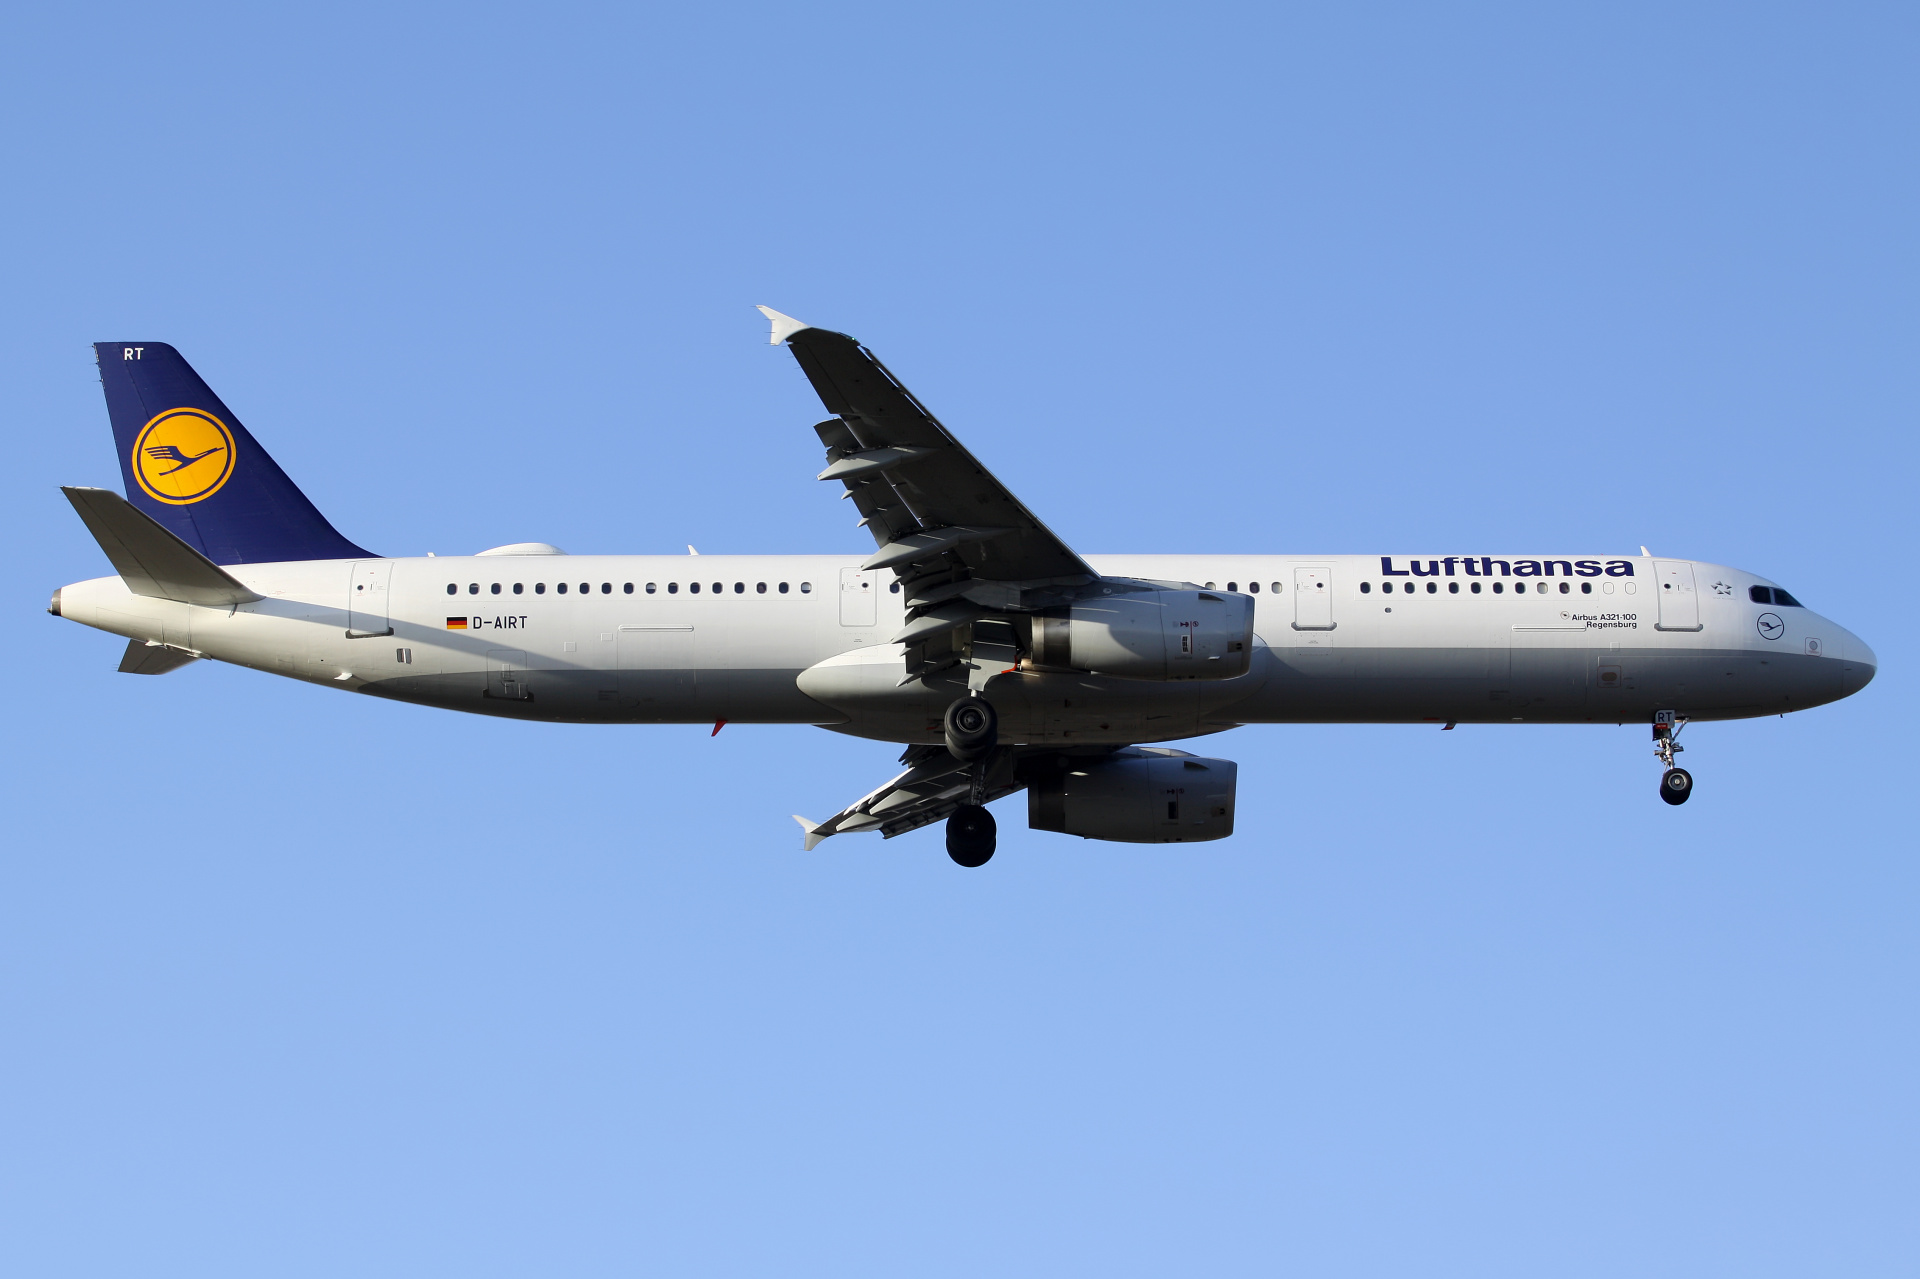 D-AIRT (Aircraft » EPWA Spotting » Airbus A321-100 » Lufthansa)